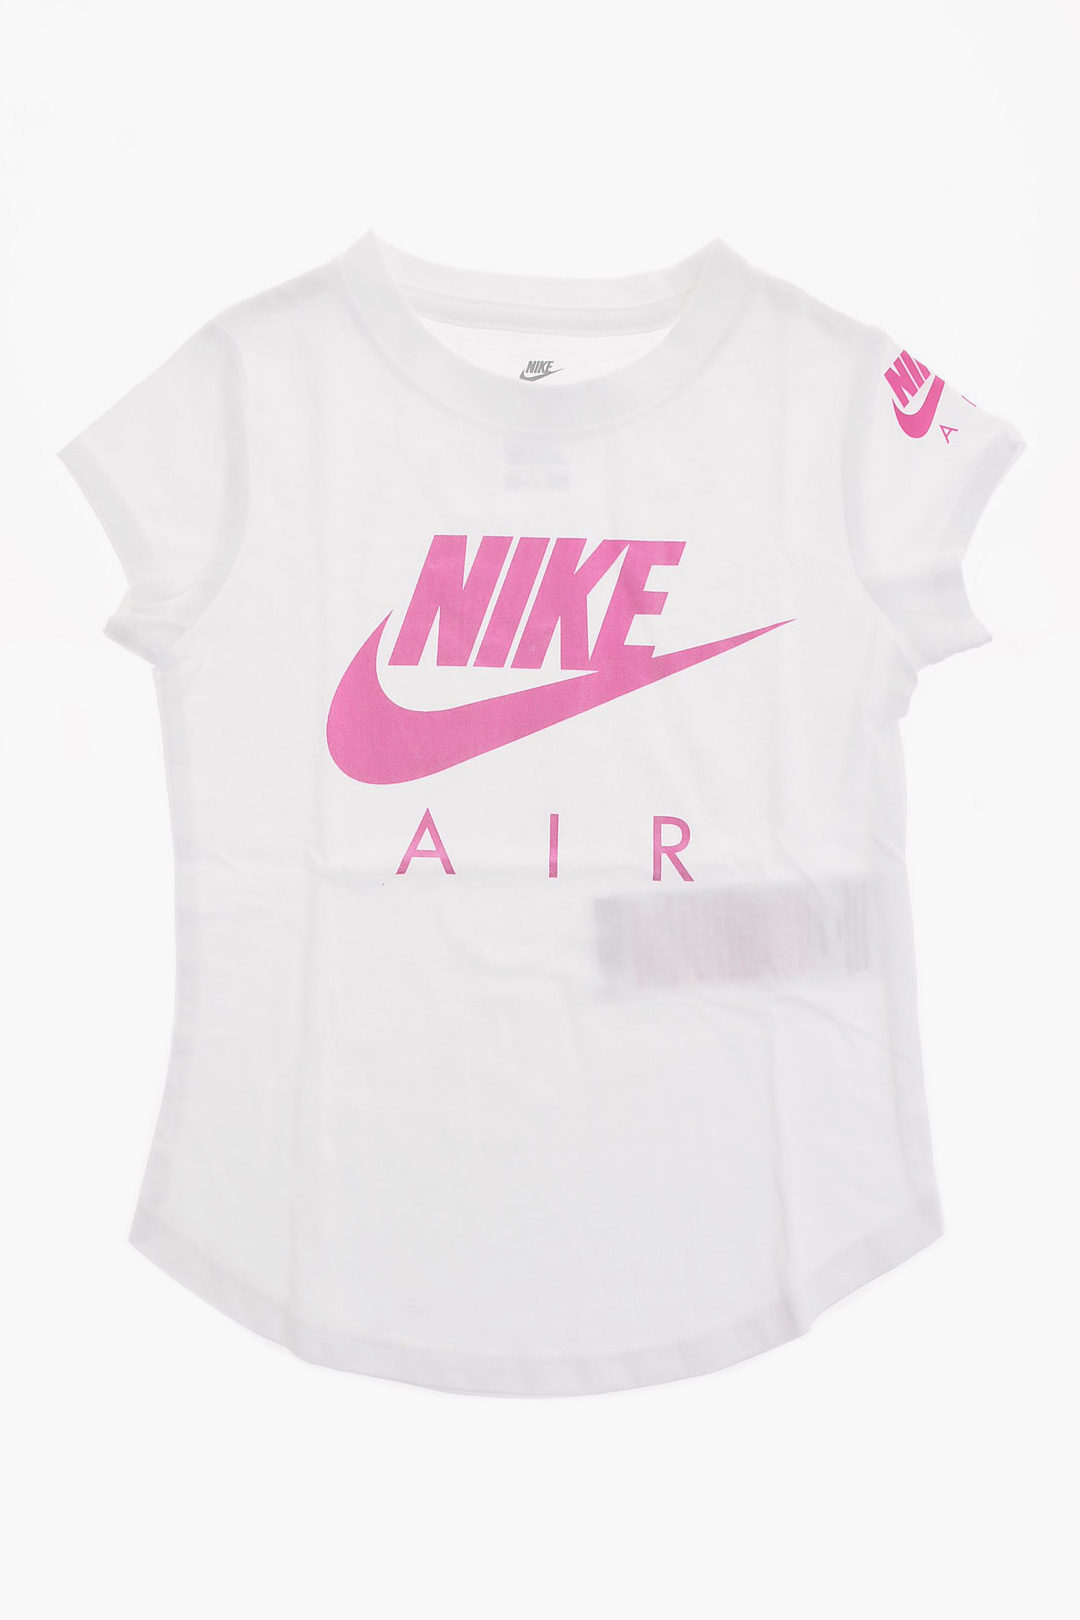 Nike KIDS AIR Jersey Logo Glitter T-shirt girls - Glamood Outlet